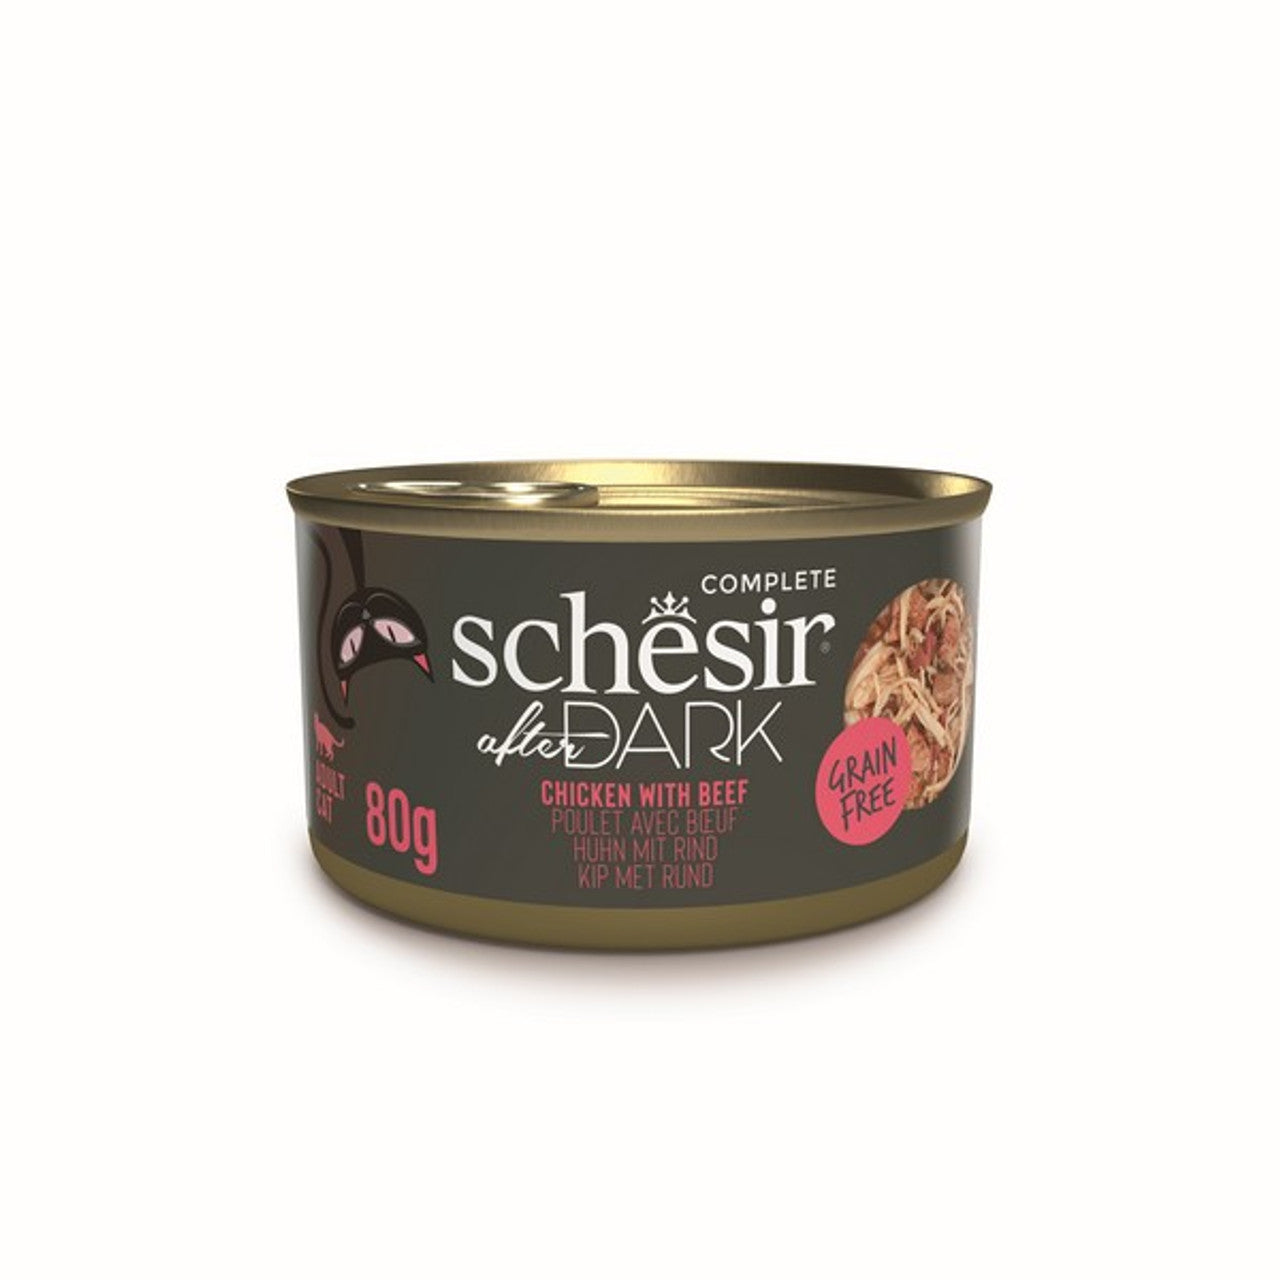 Schesir After Dark Wholefood Adult Cat Food 80g x 12 Pack